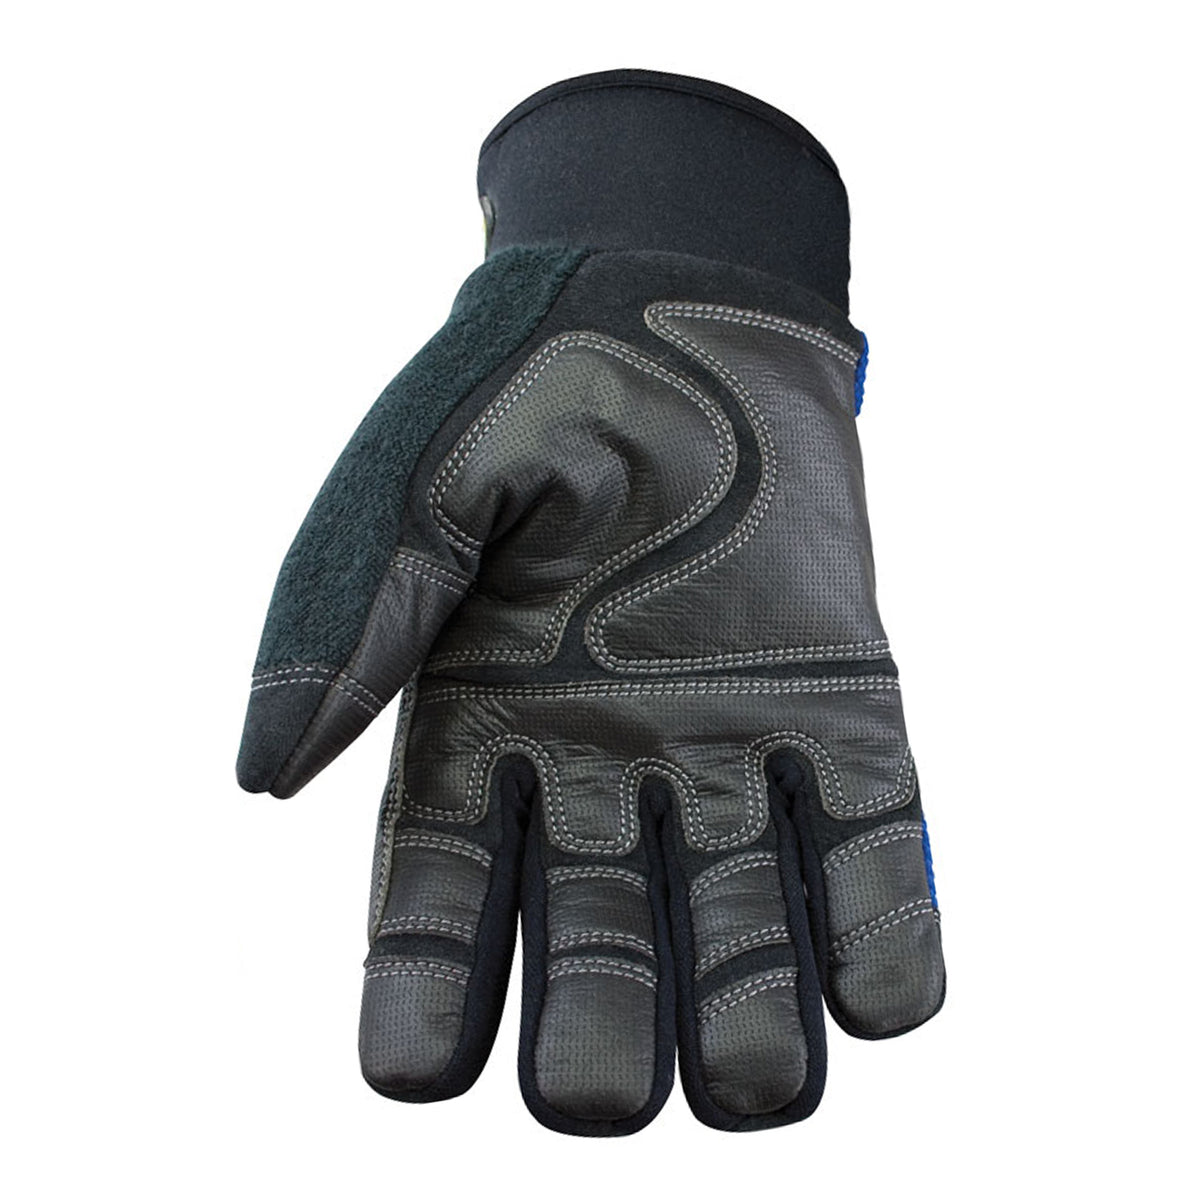 OriStout Winter Work Gloves Waterproof for Men Women, Freezer Gloves for  Work Below Zero, Thermal Insulated, Super Grip, Red, Medium